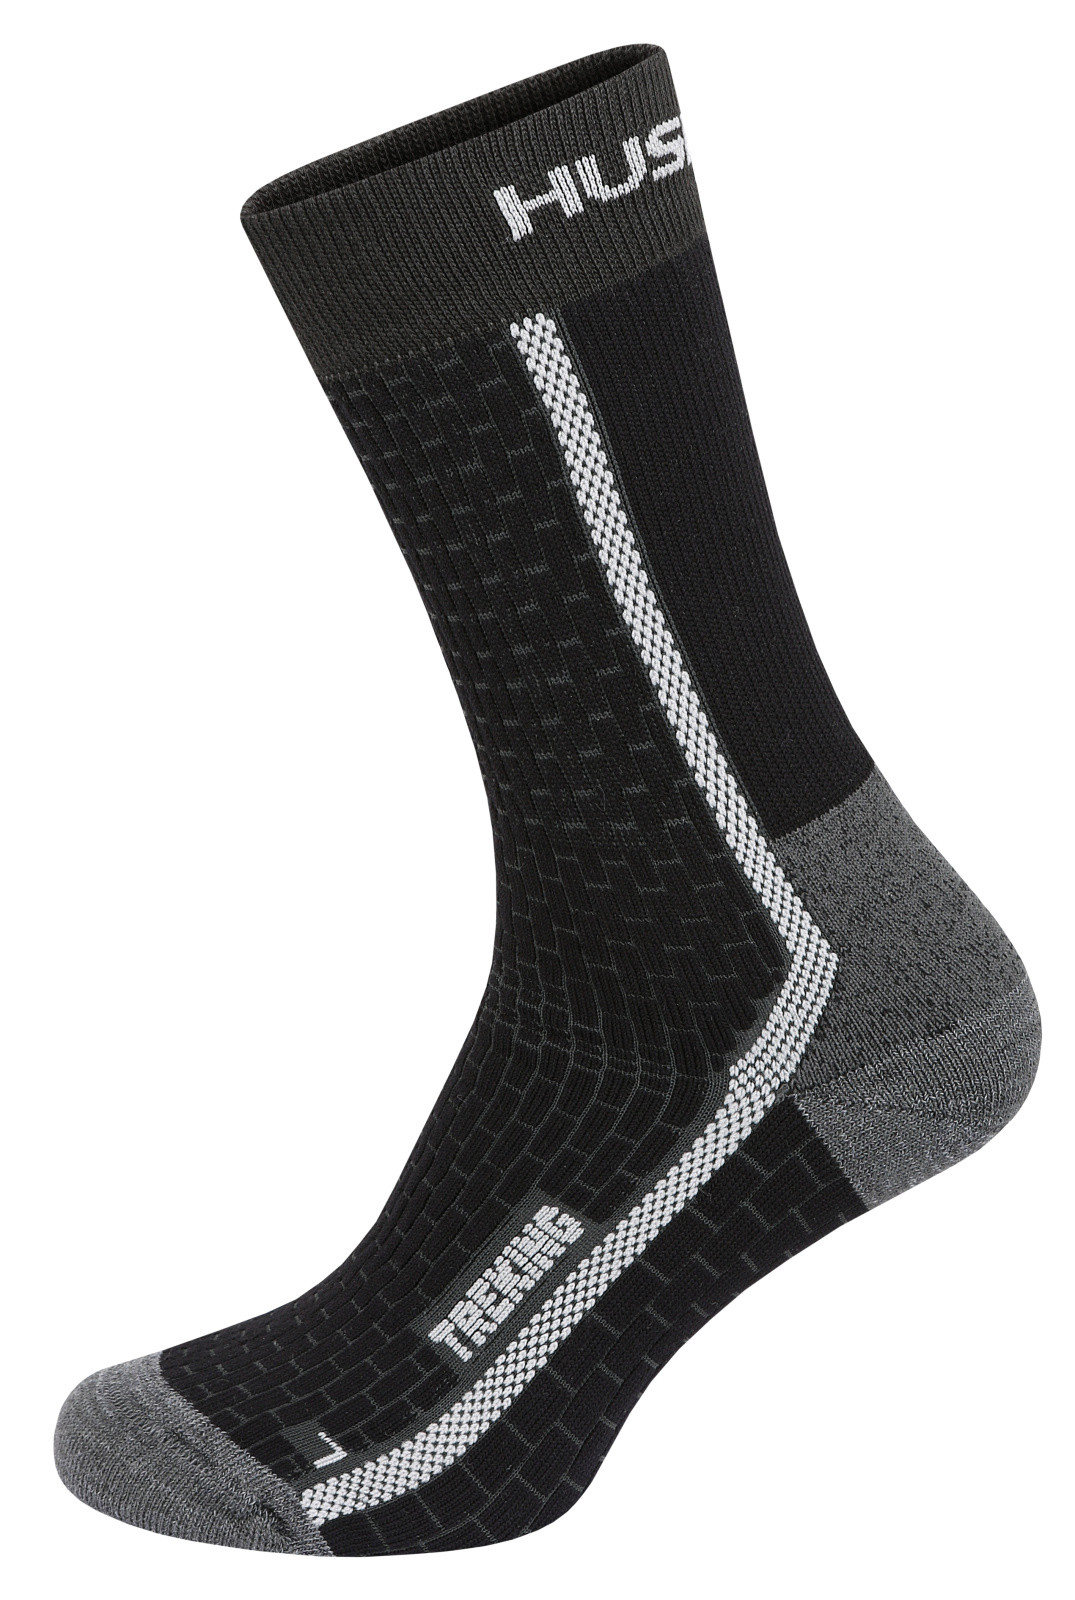 Husky Treking XL (45-48), black/grey Ponožky